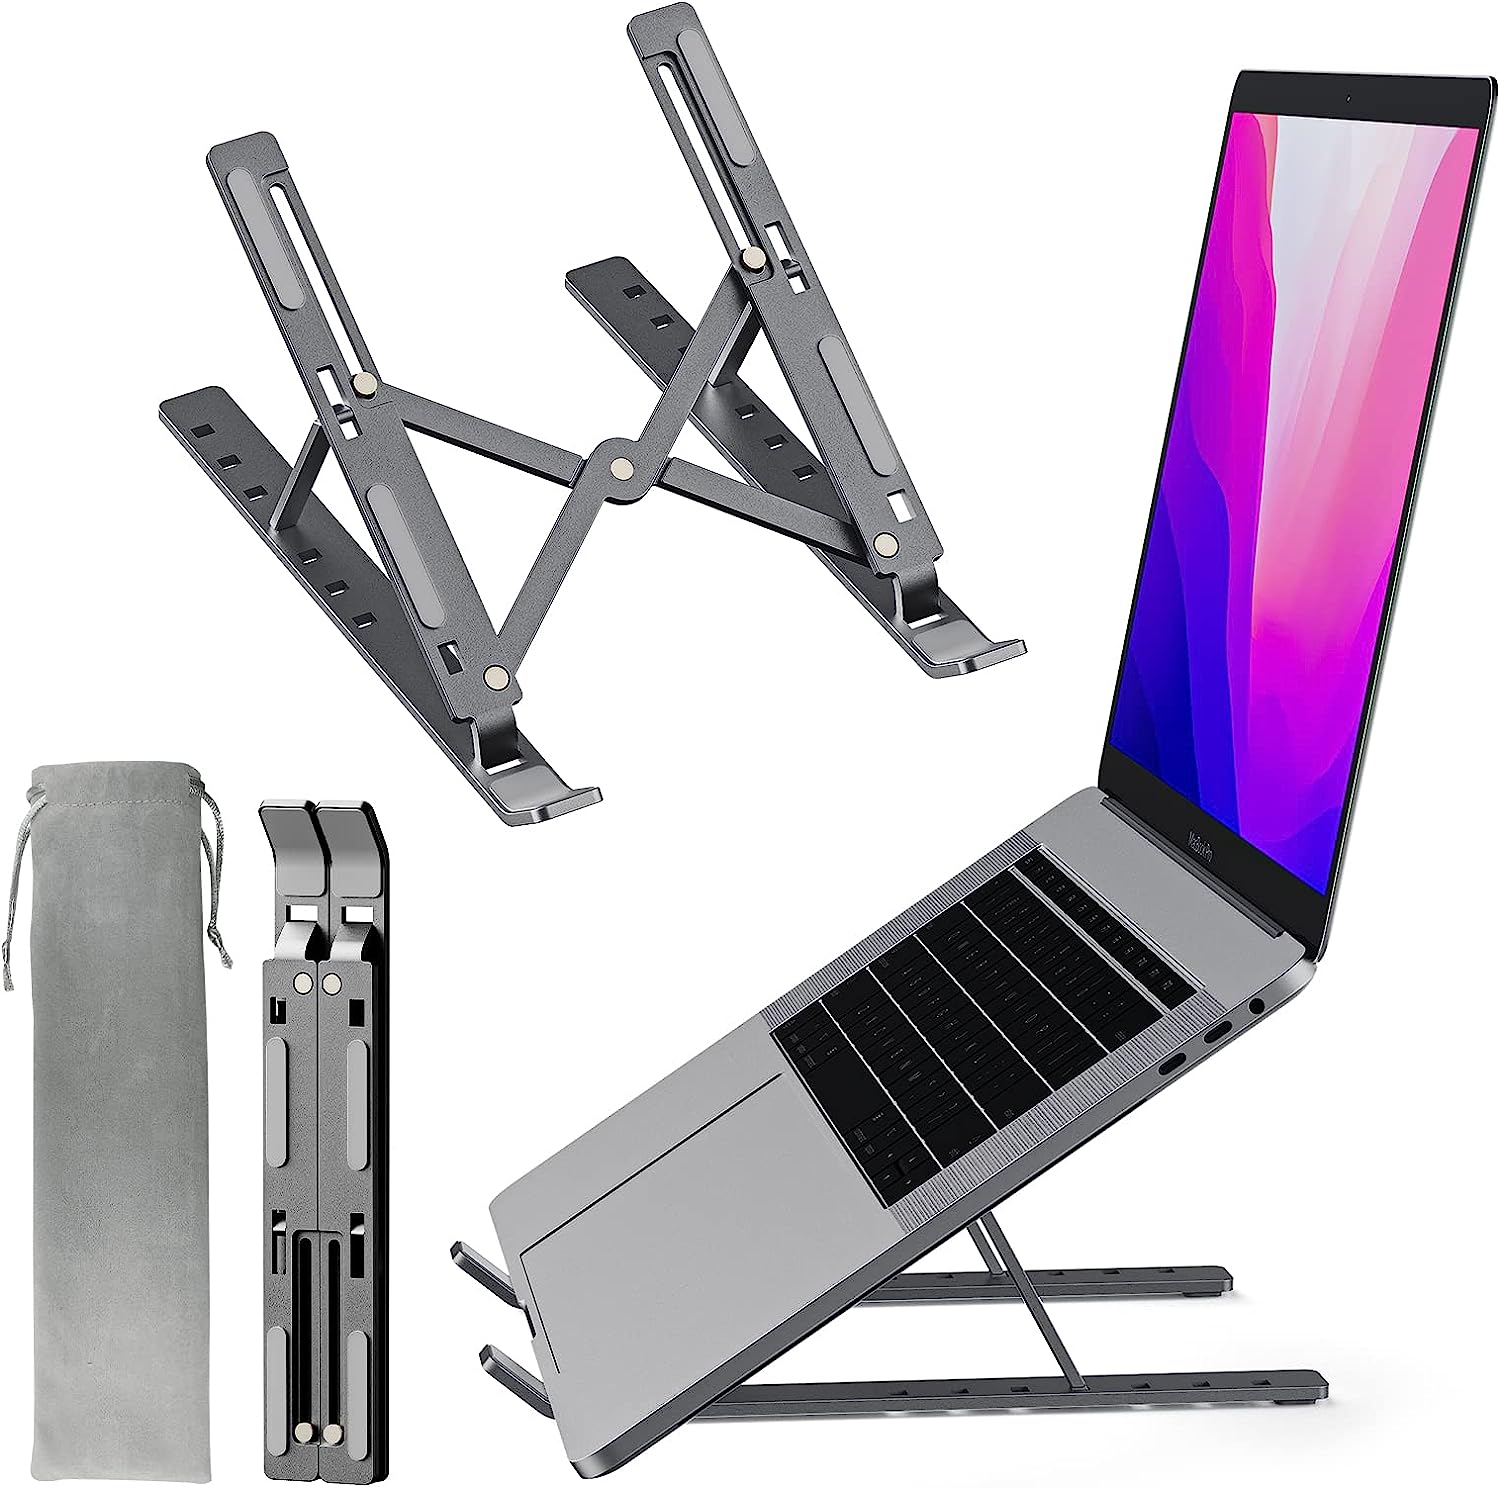 avakot Small Laptop Stand for Desk 7-Angle Adjustable | Ergonomic Foldable Aluminum Laptop Holder | Anti-Slip Portable Computer Stand Laptop Riser for MacBook iPad Tablet Laptop 9-15.6 Inch | Gray